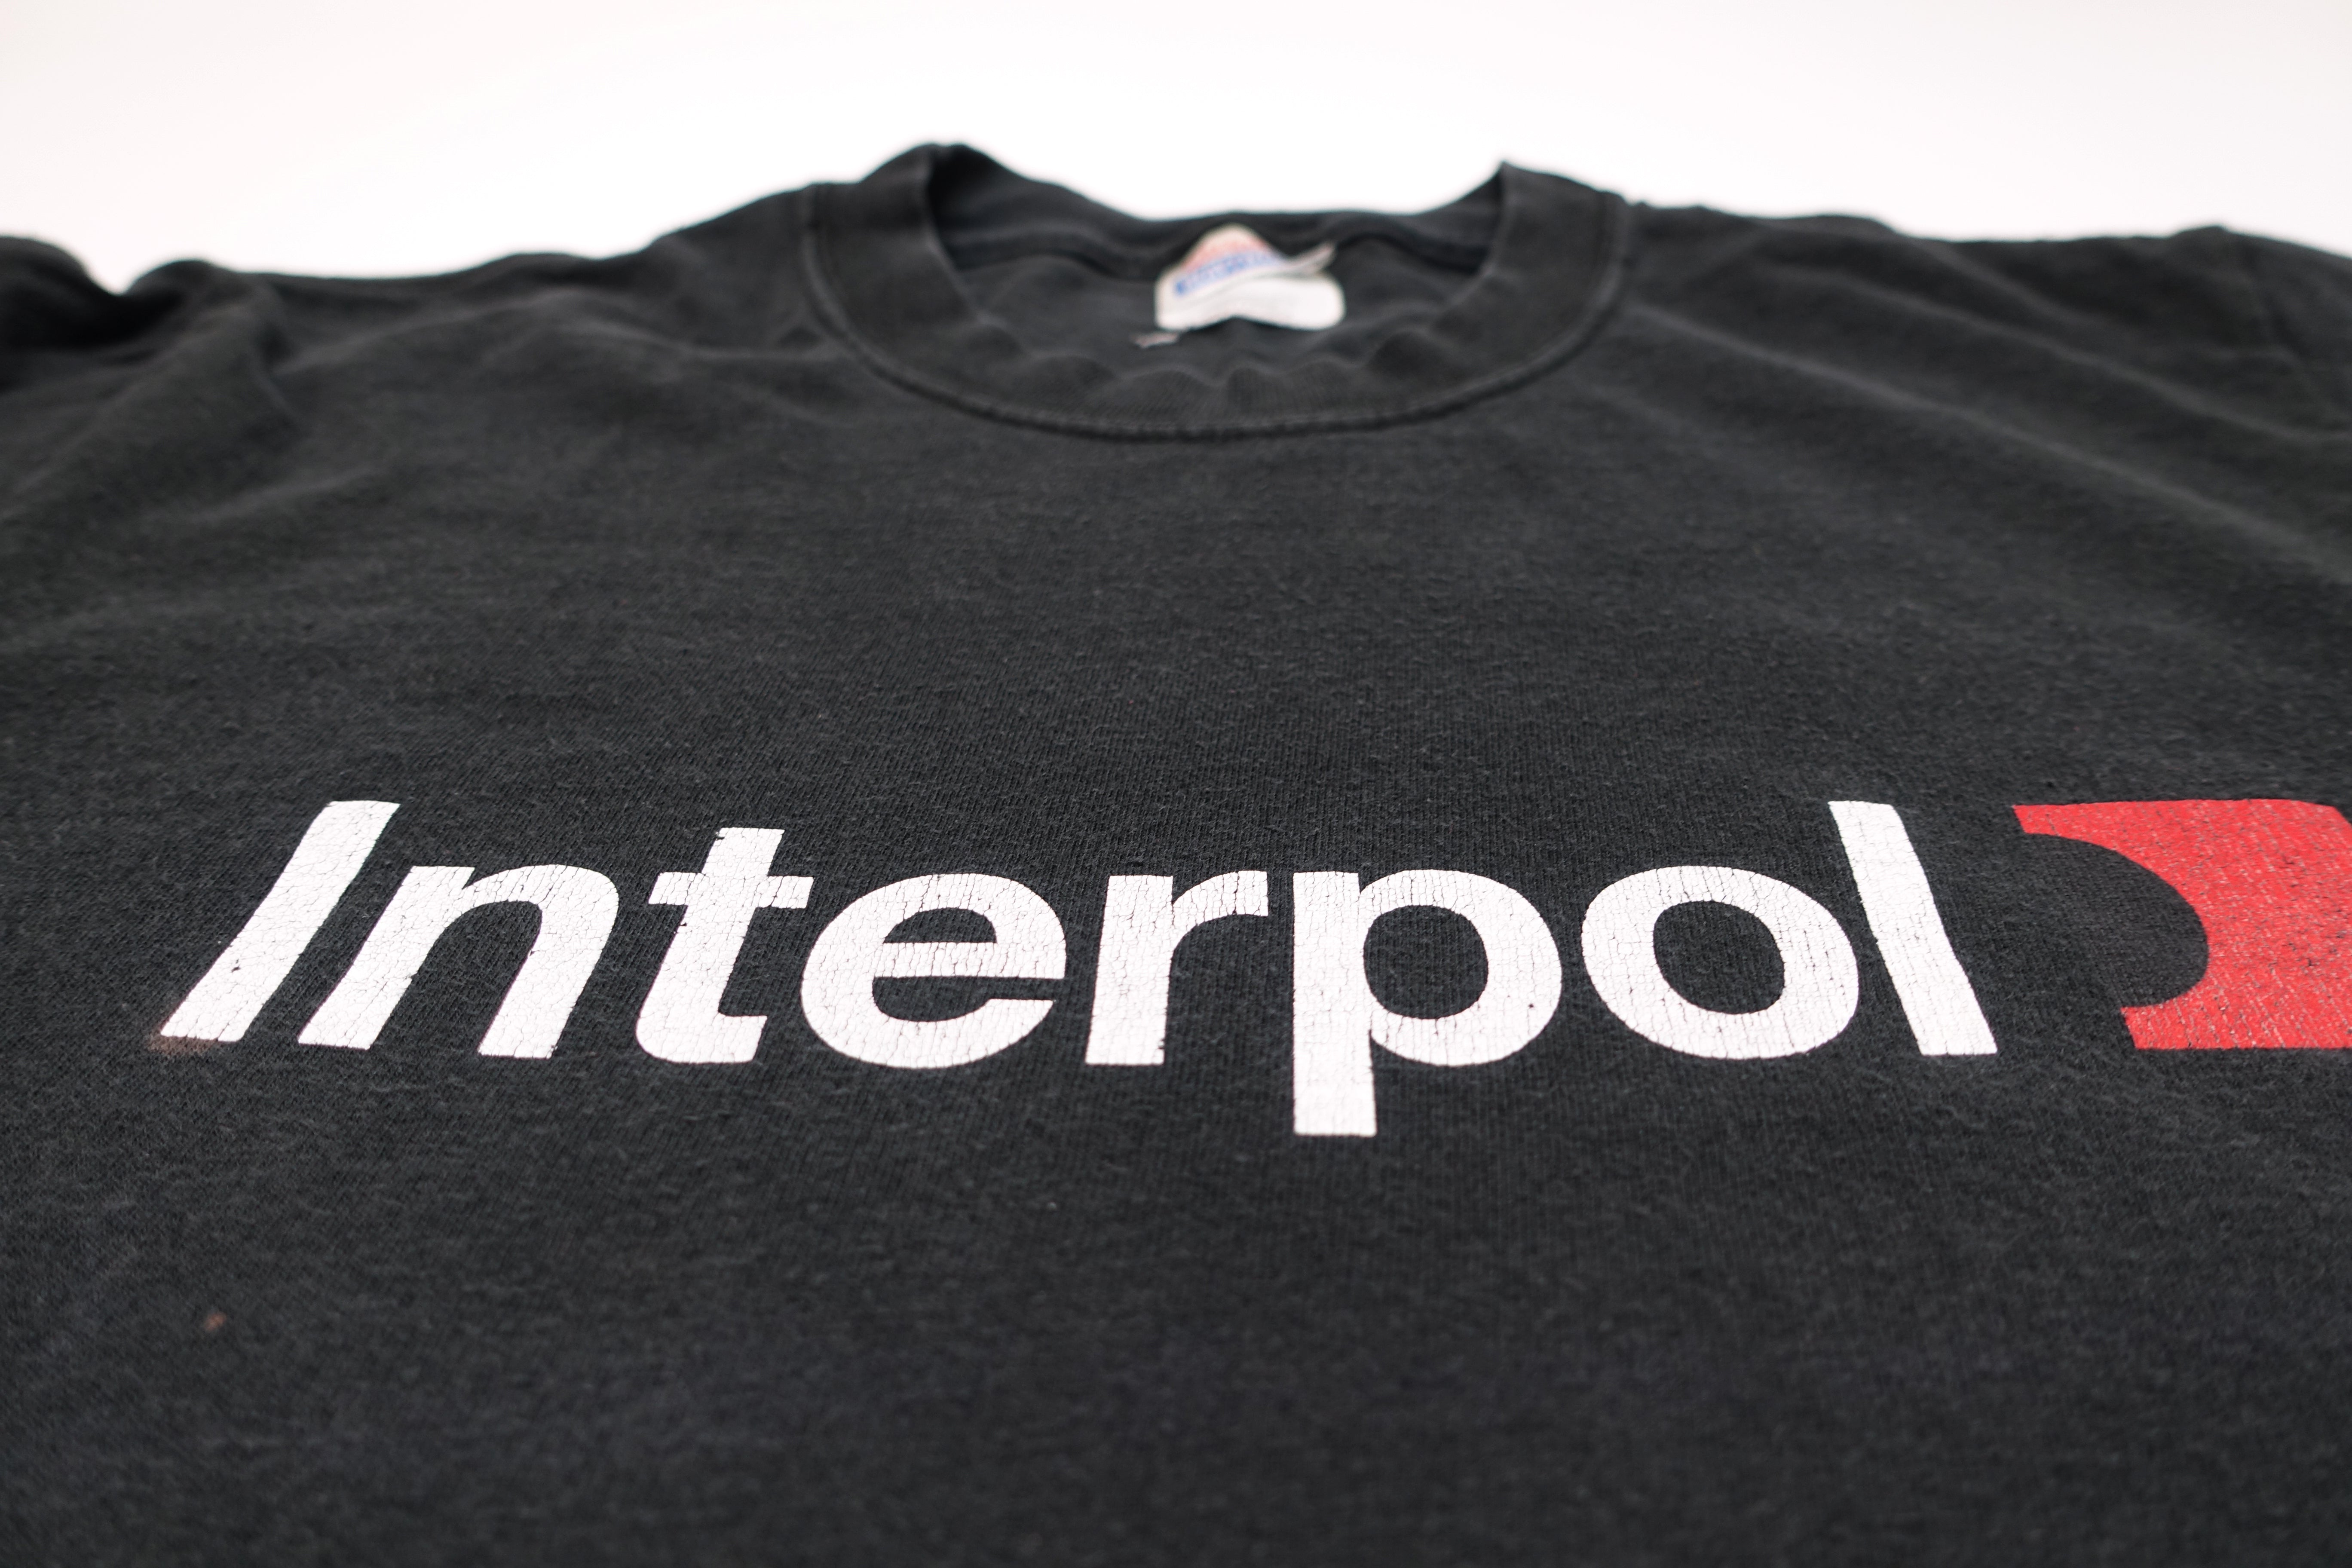 Interpol ‎– S/T EP Logo 2002 Tour Shirt Size Small